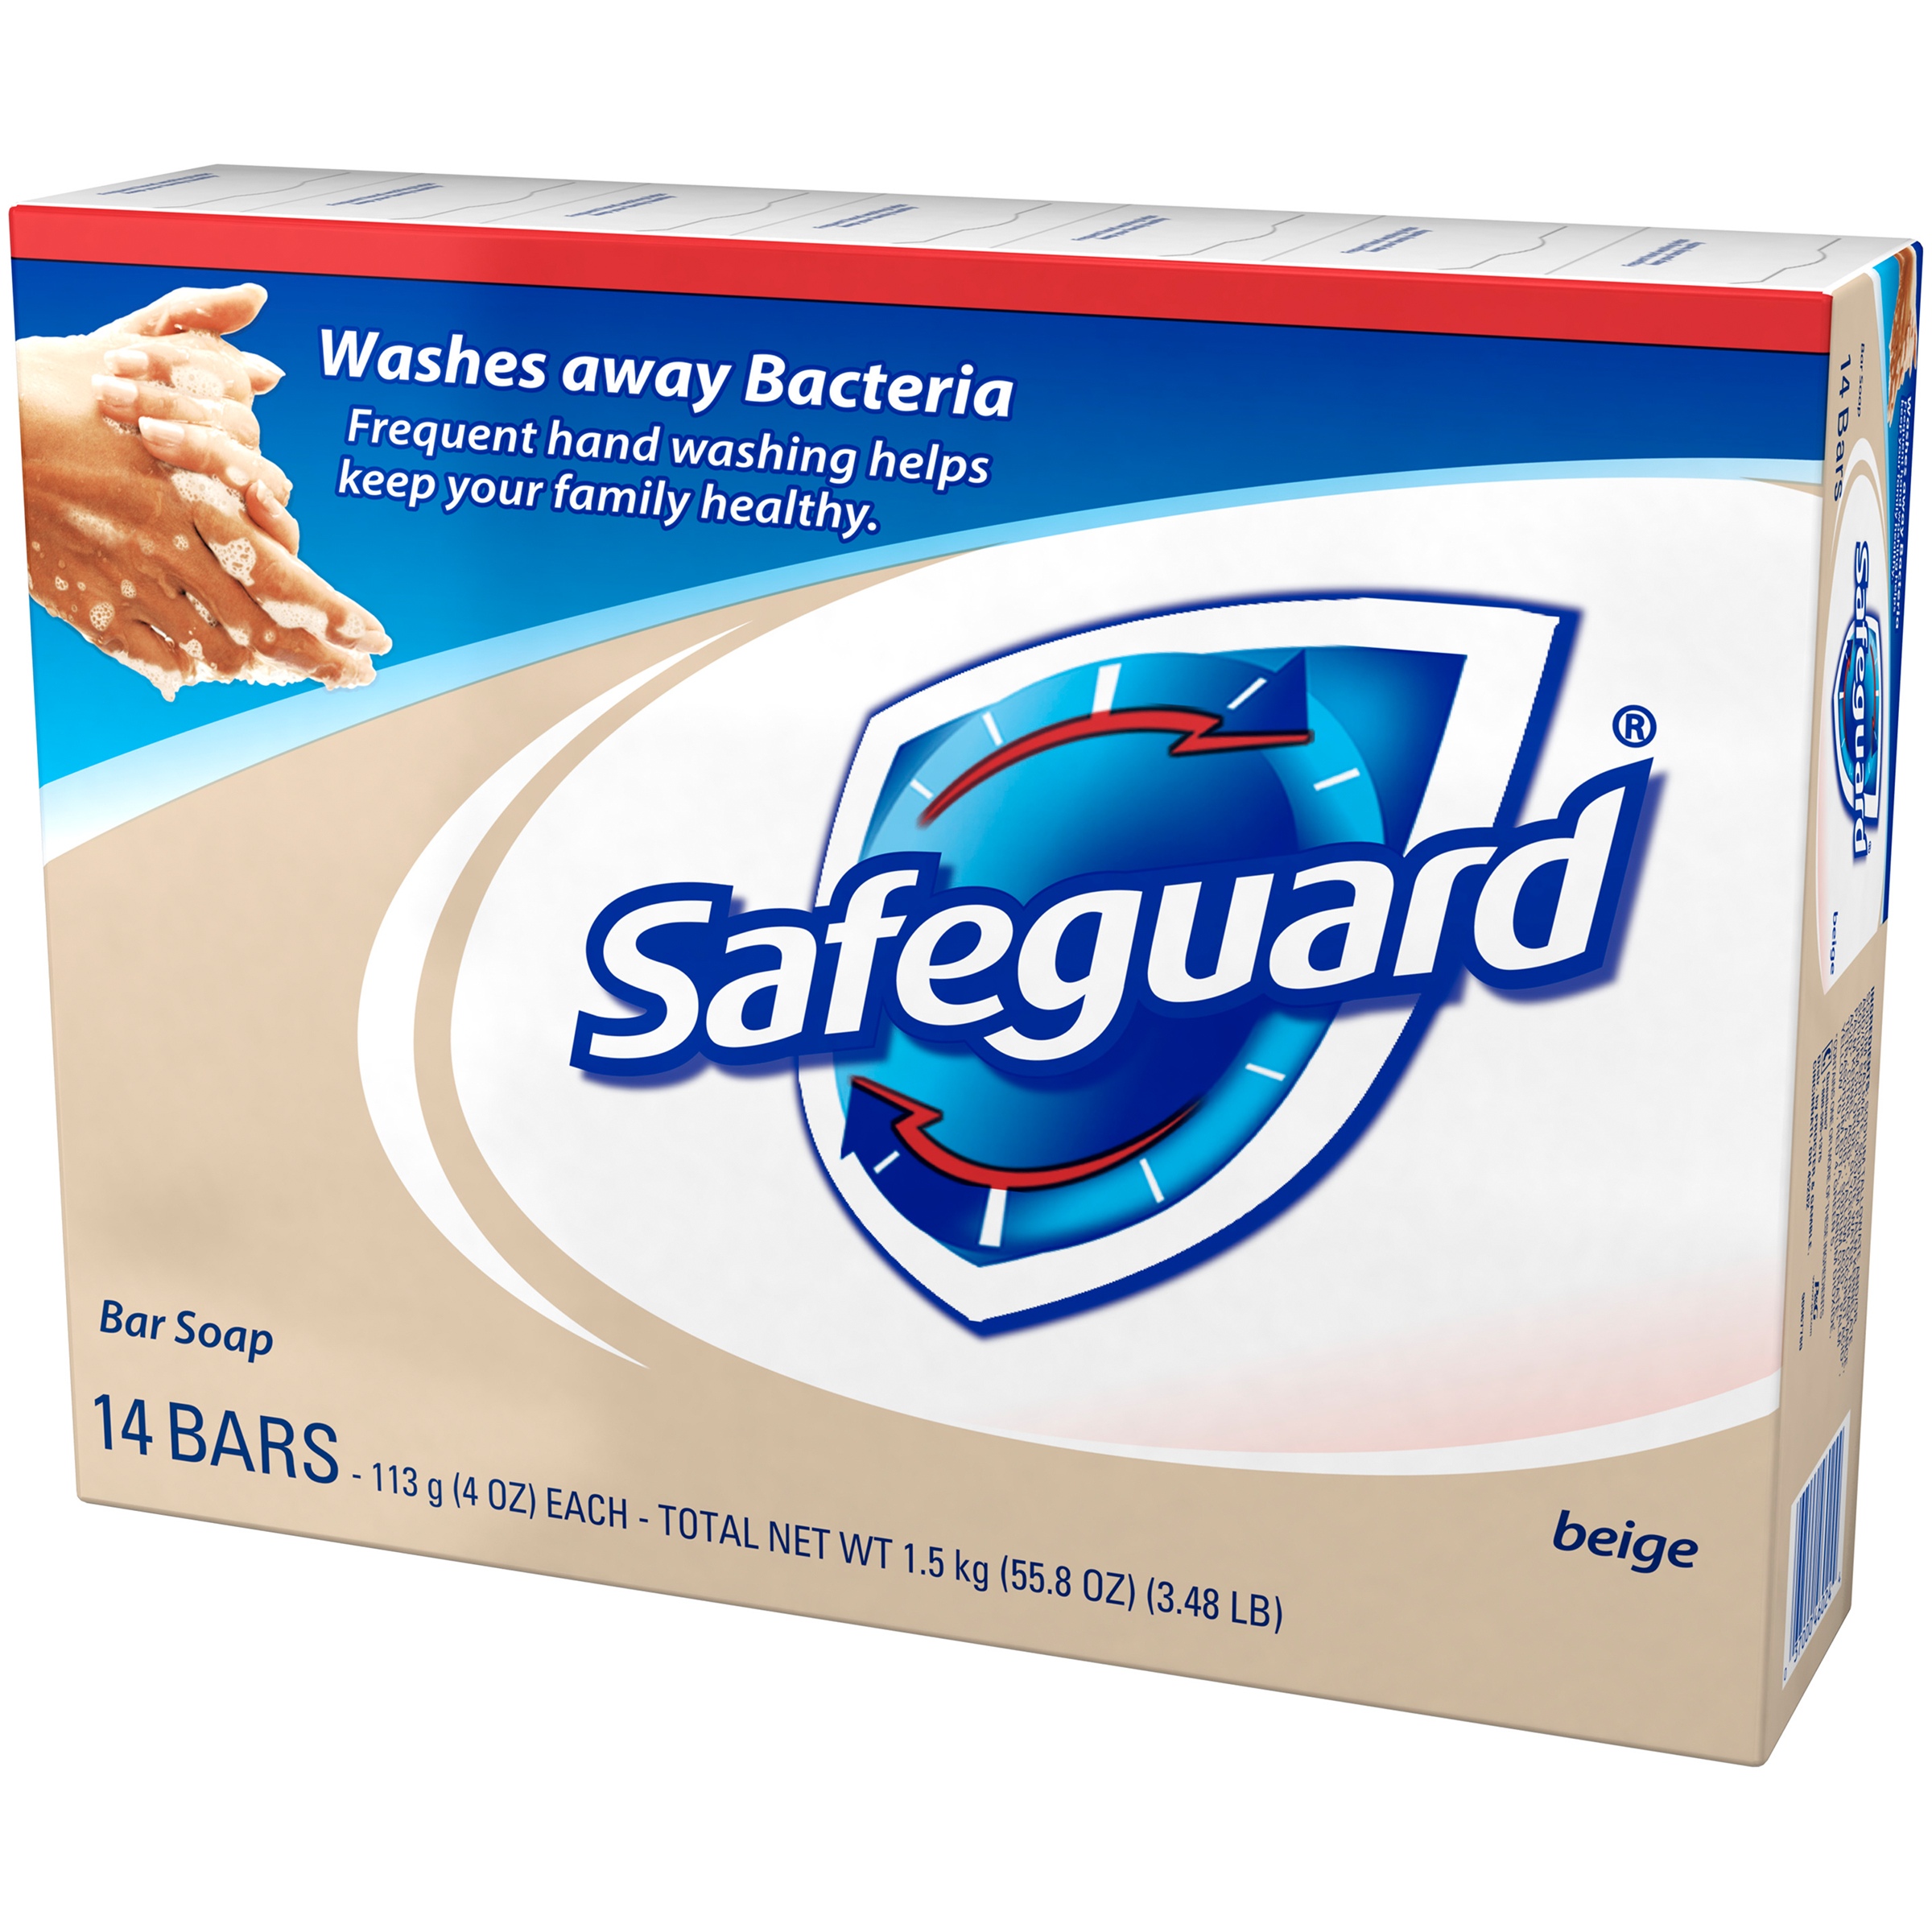 Safeguard Original Bar Soap, Beige, 4 Ounces, 14 Pack - image 4 of 6